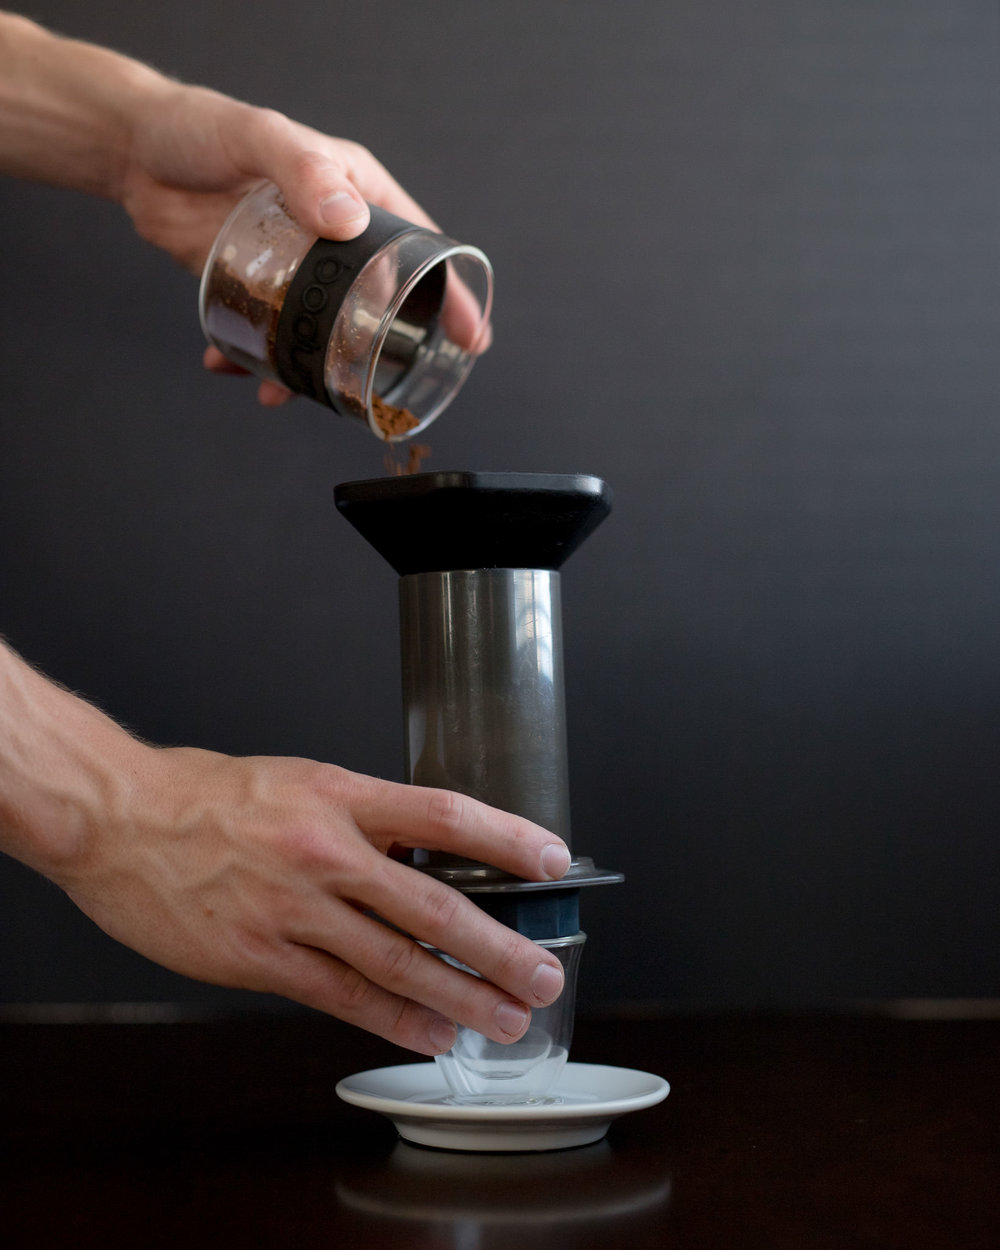 Add 20g of finely ground coffee to the Aeropress